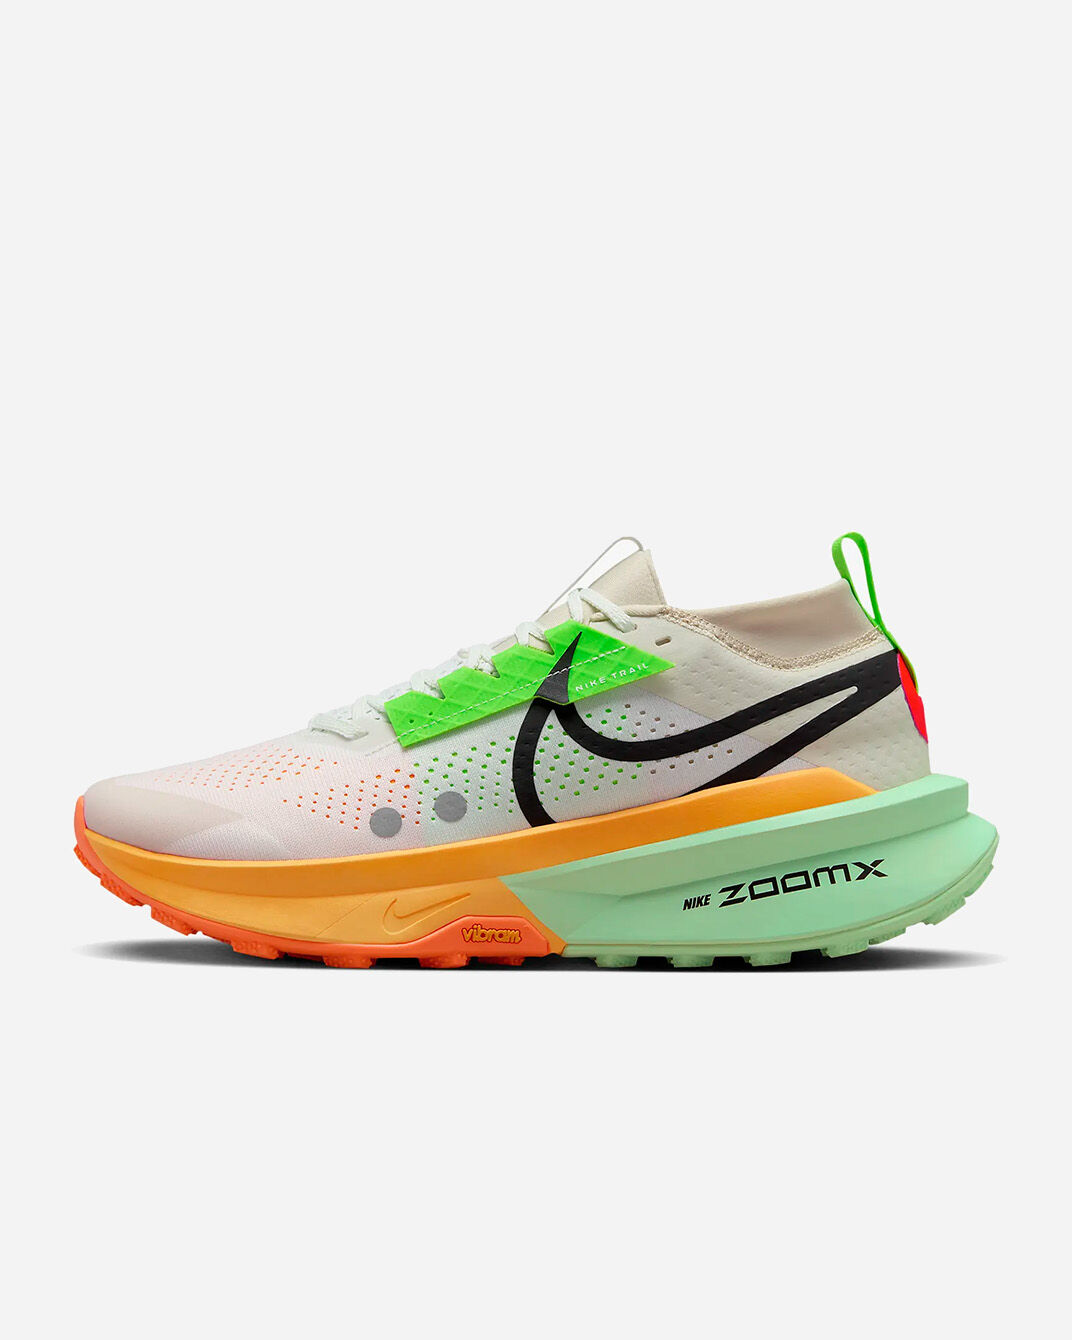 Nike Chaussures de Running Zegama Trail 2 pour Homme Couleur : Summit White/Black-Laser Orange Taille : 42.5 EU   9 US 9